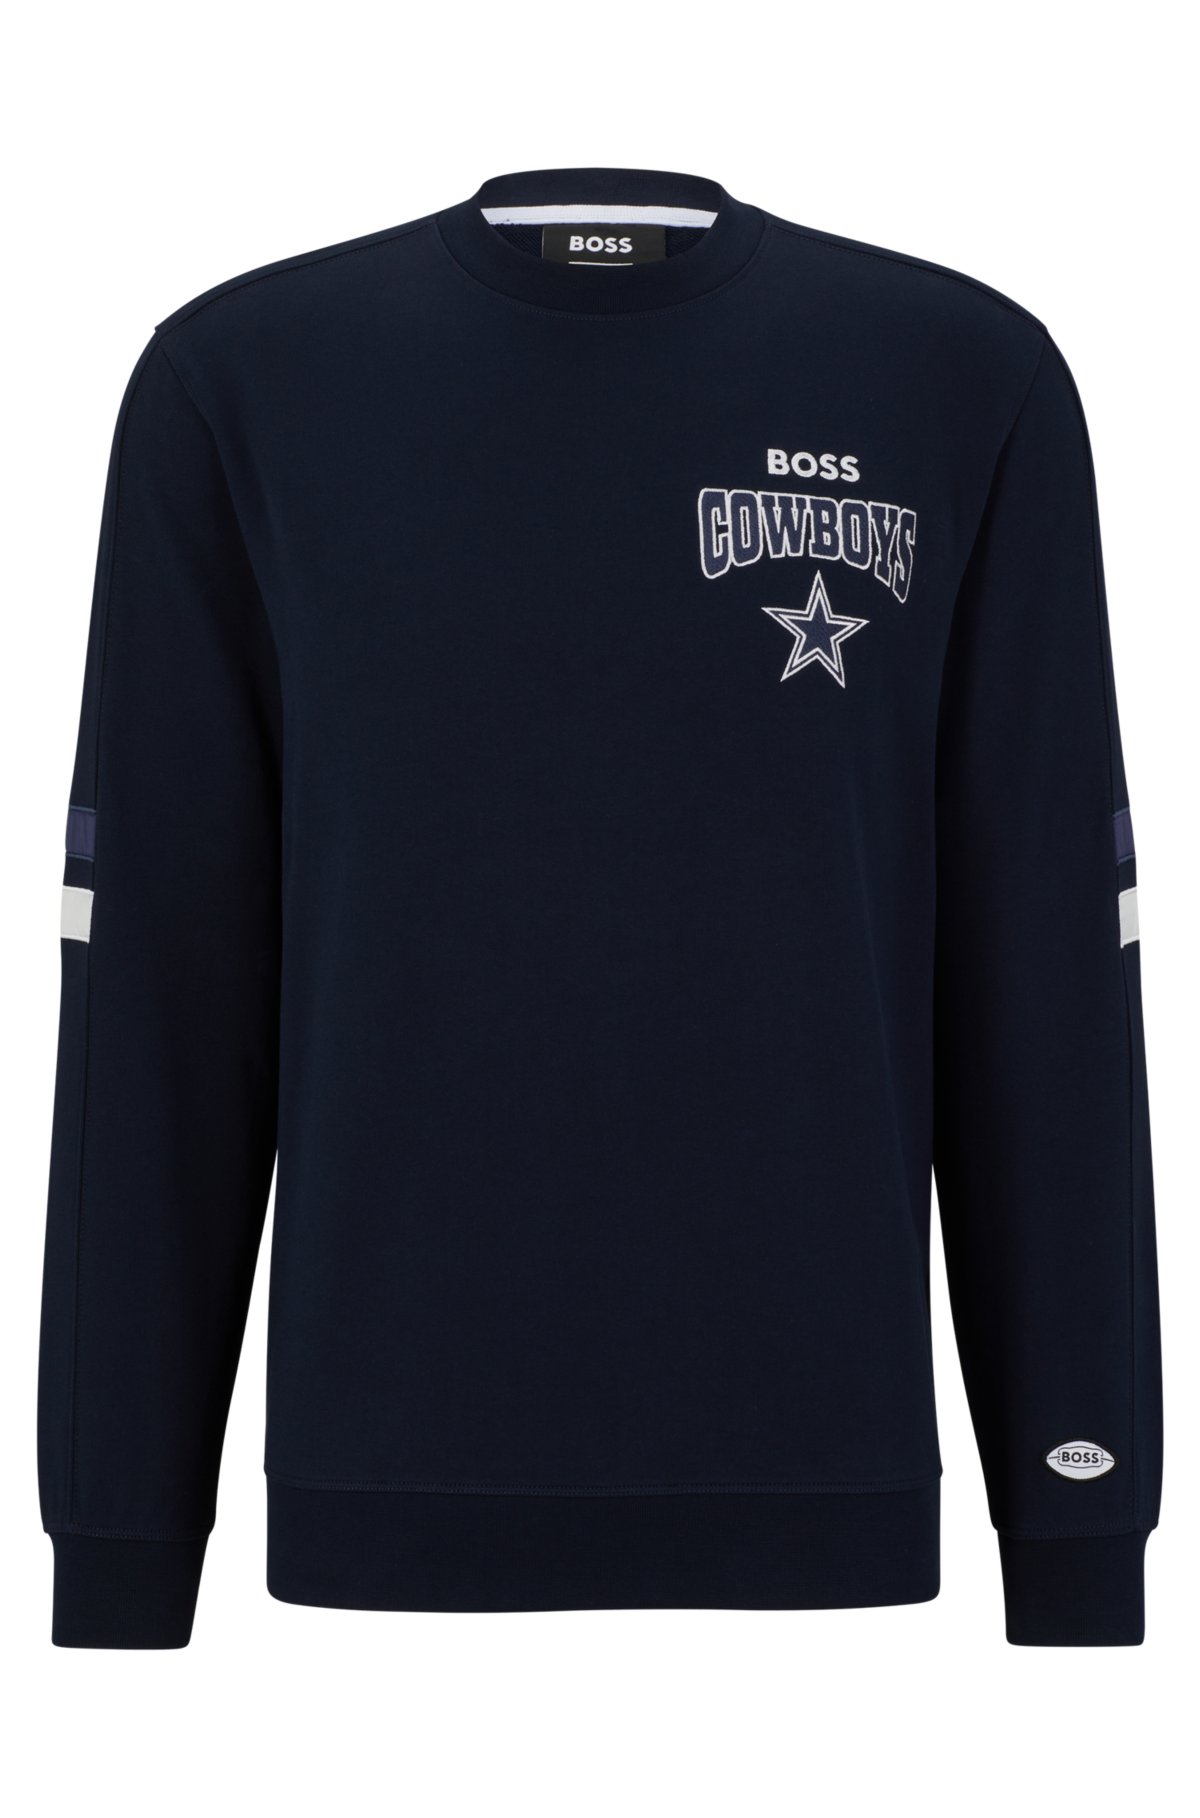 BOSS x NFL cotton-terry sweatshirt with collaborative branding, Cowboys